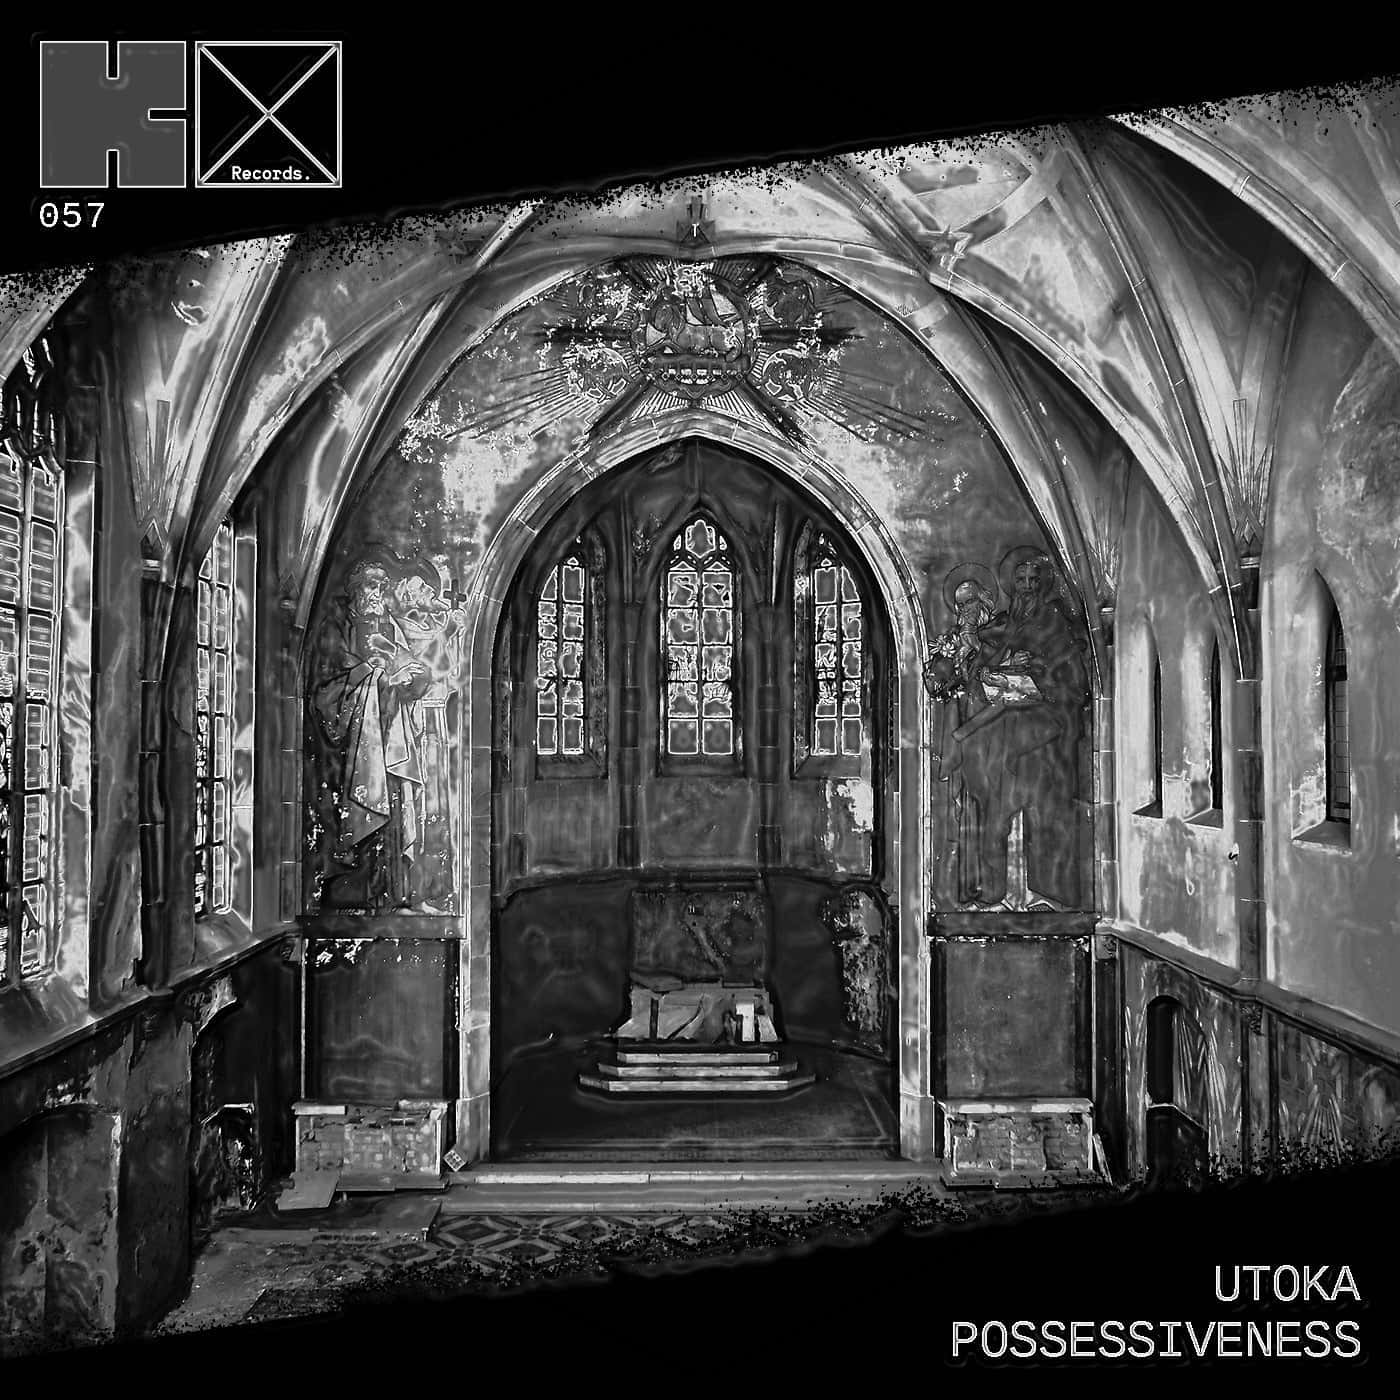 Download UTOKA - Possessiveness on Electrobuzz